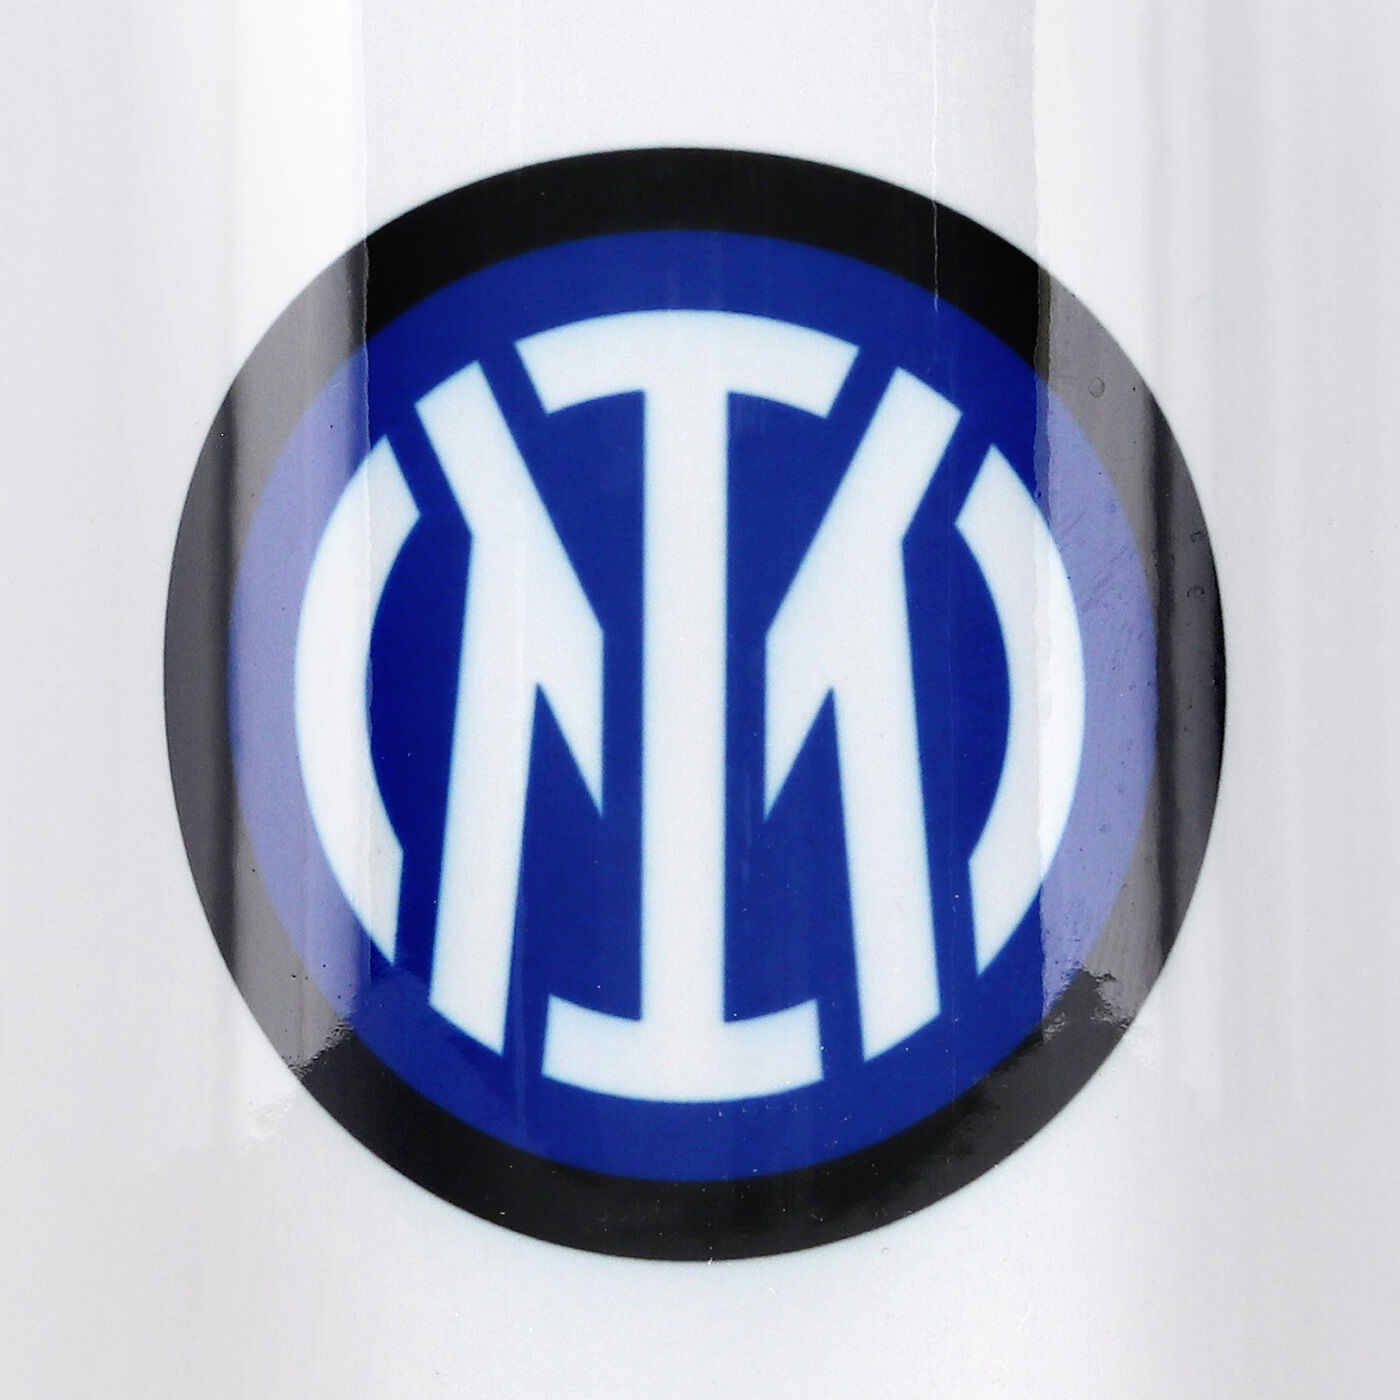 Tazza Inter Logo - ND - Idee regalo